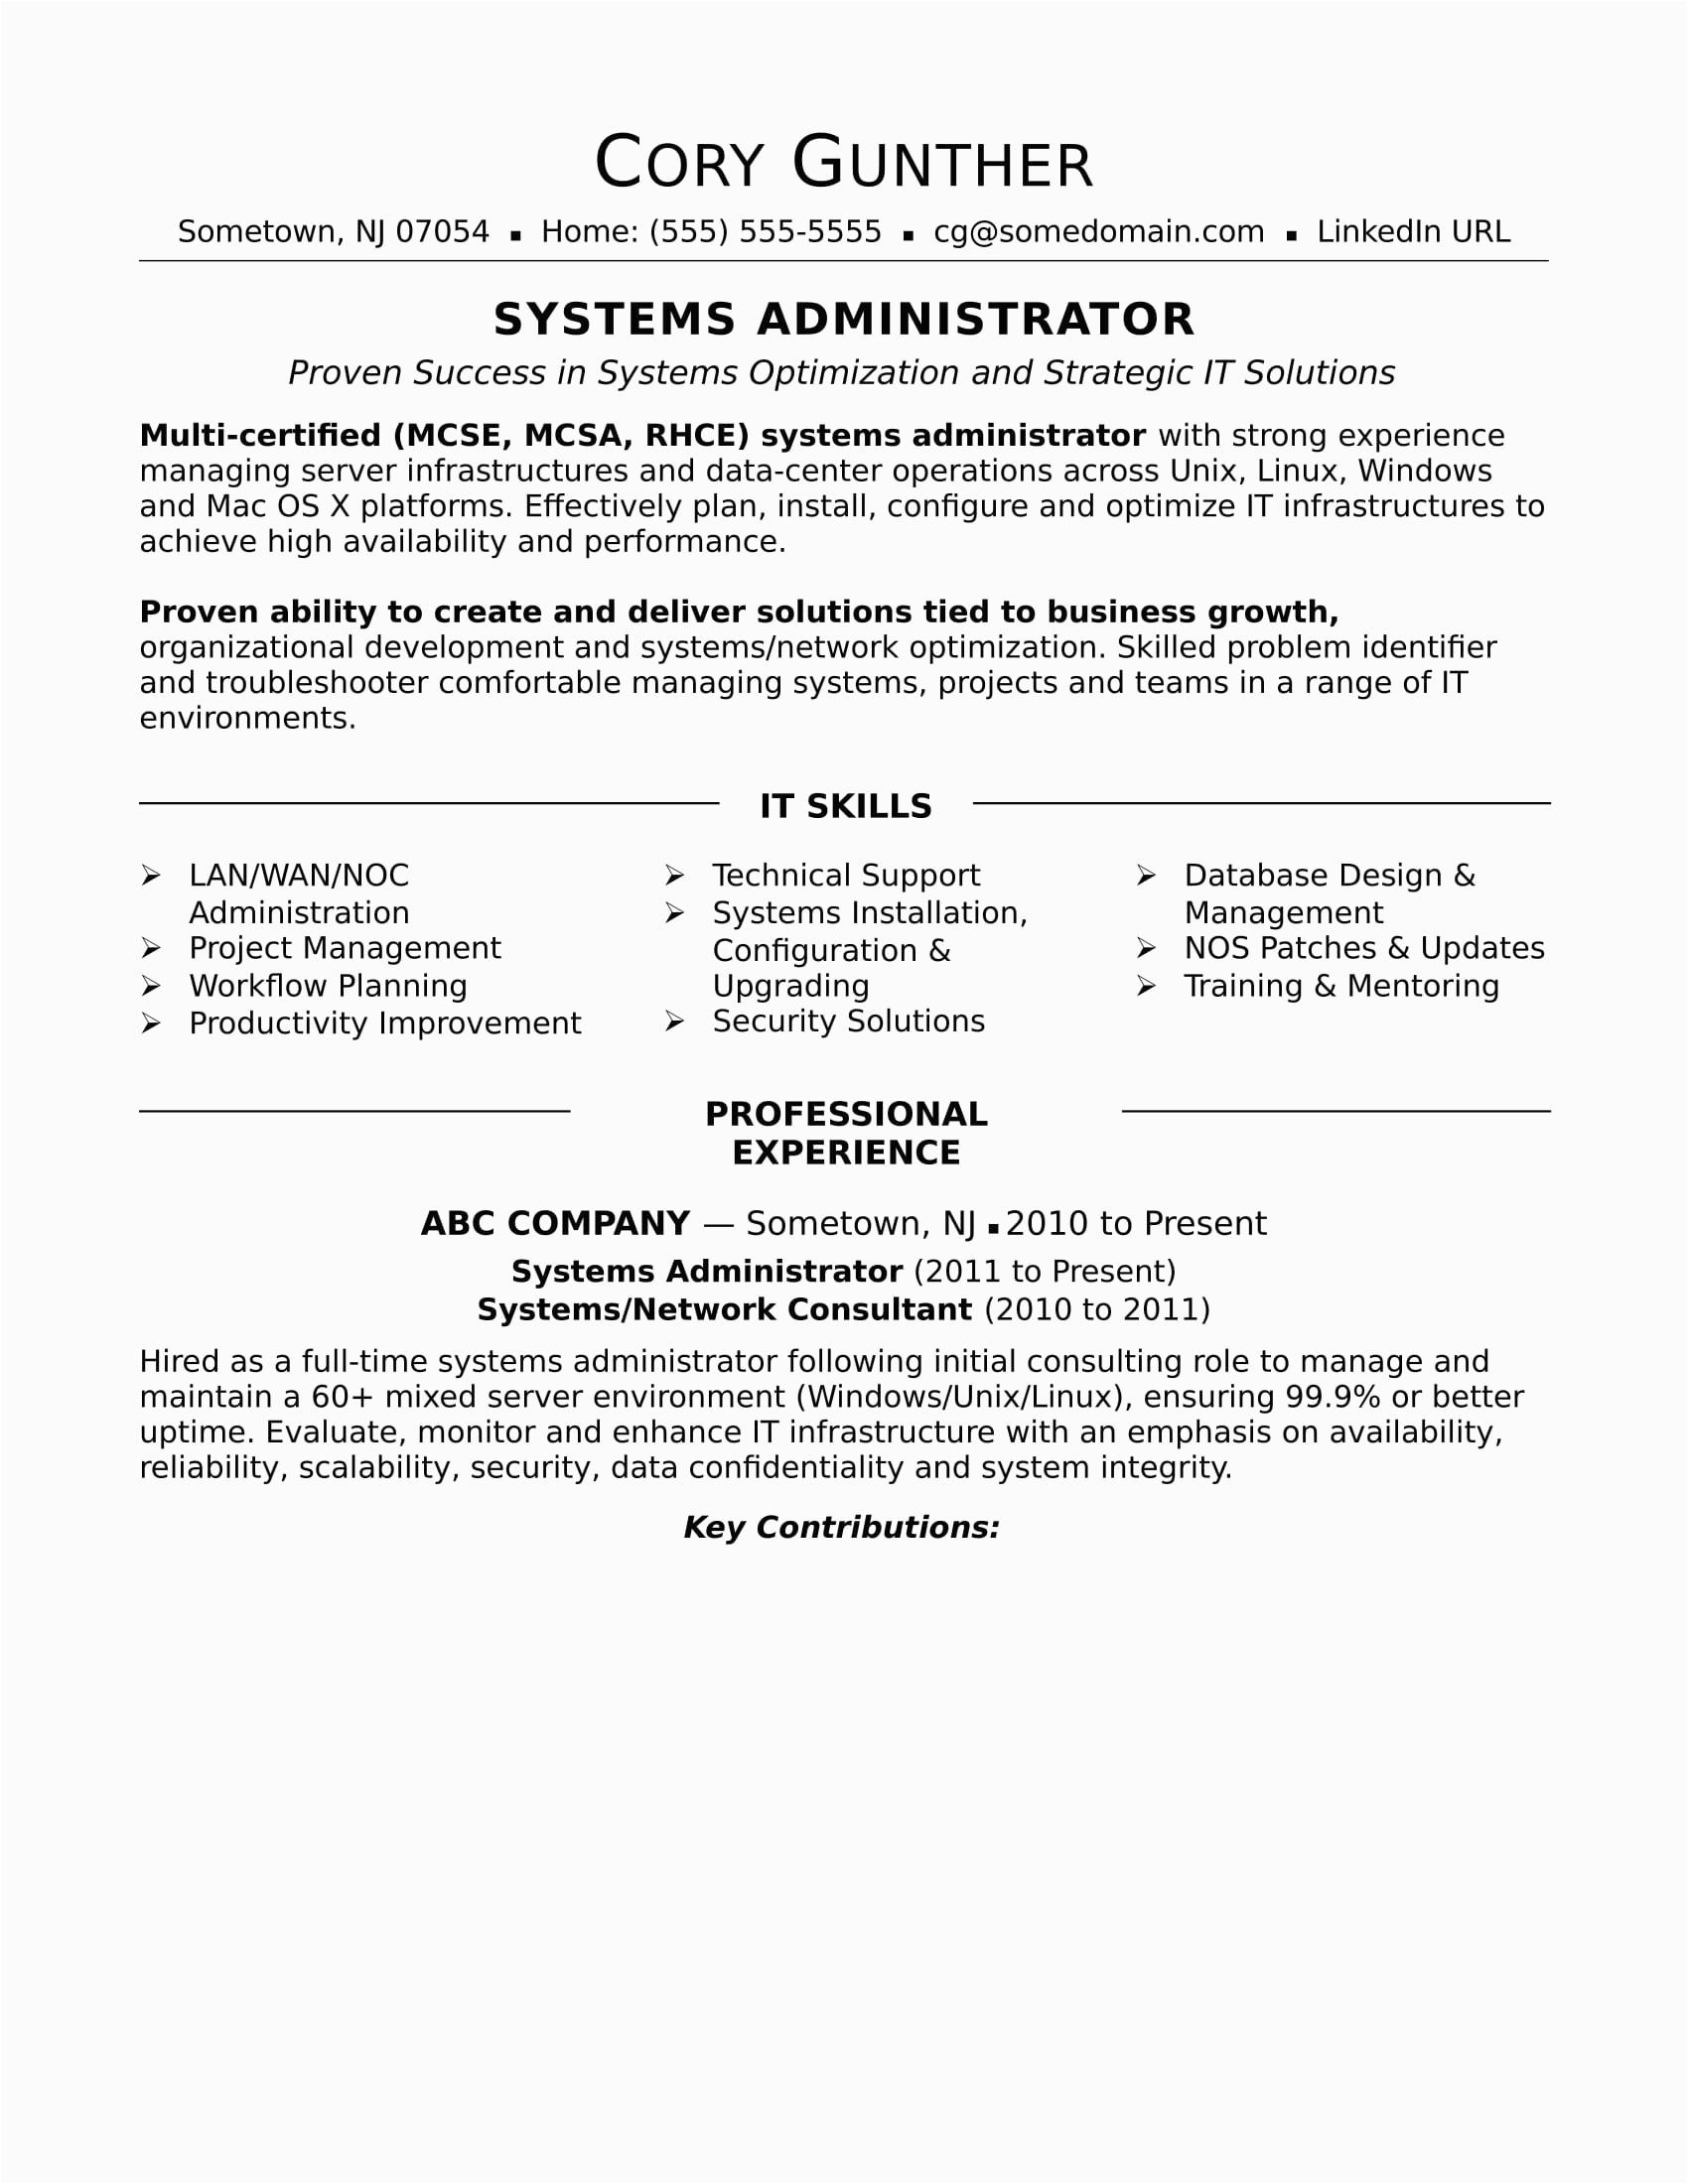 Sample Resume for A Network Administrator Professional Cv Network Administrator Network Administrator Resume